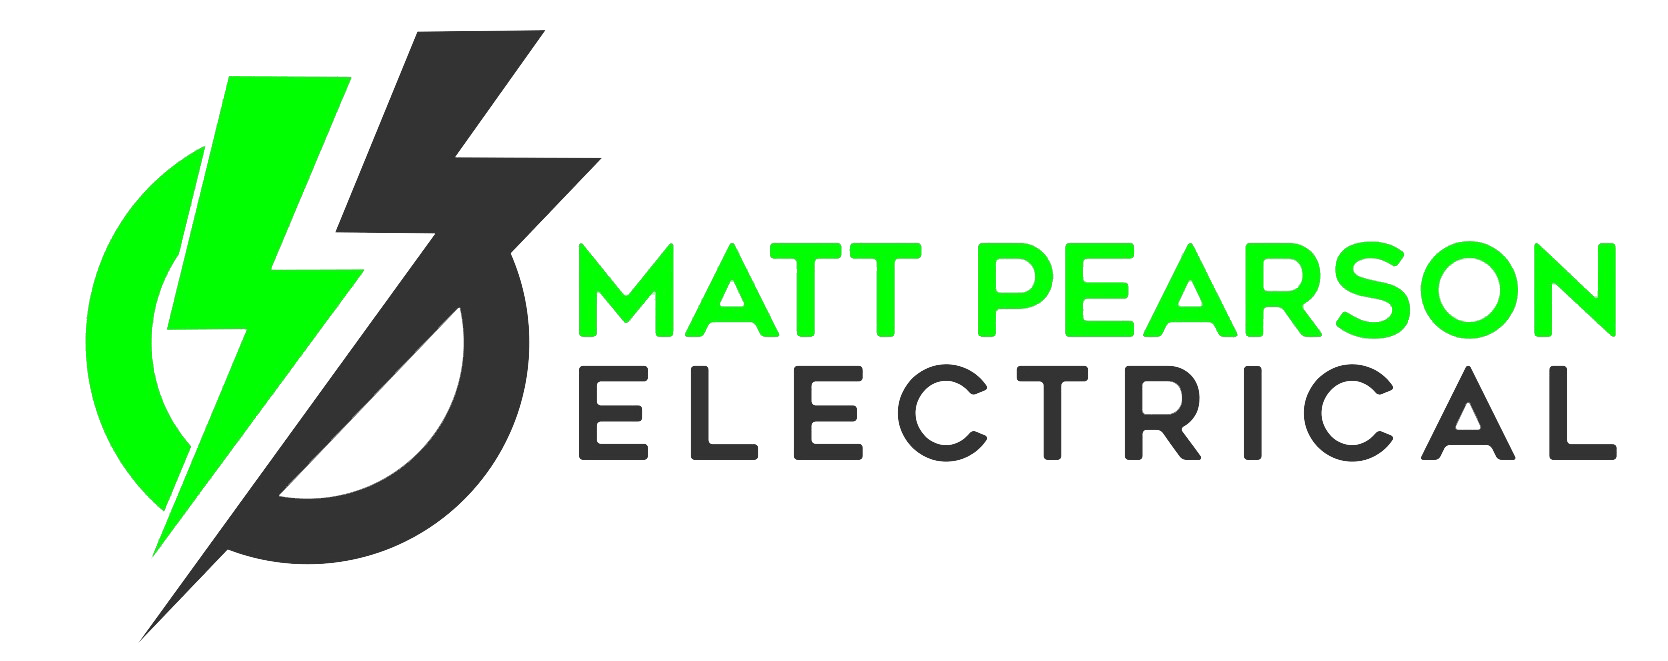 Electrical Contractor Logo - Matt Pearson Electrical – Electrician Maitland Newcastle Hunter Valley